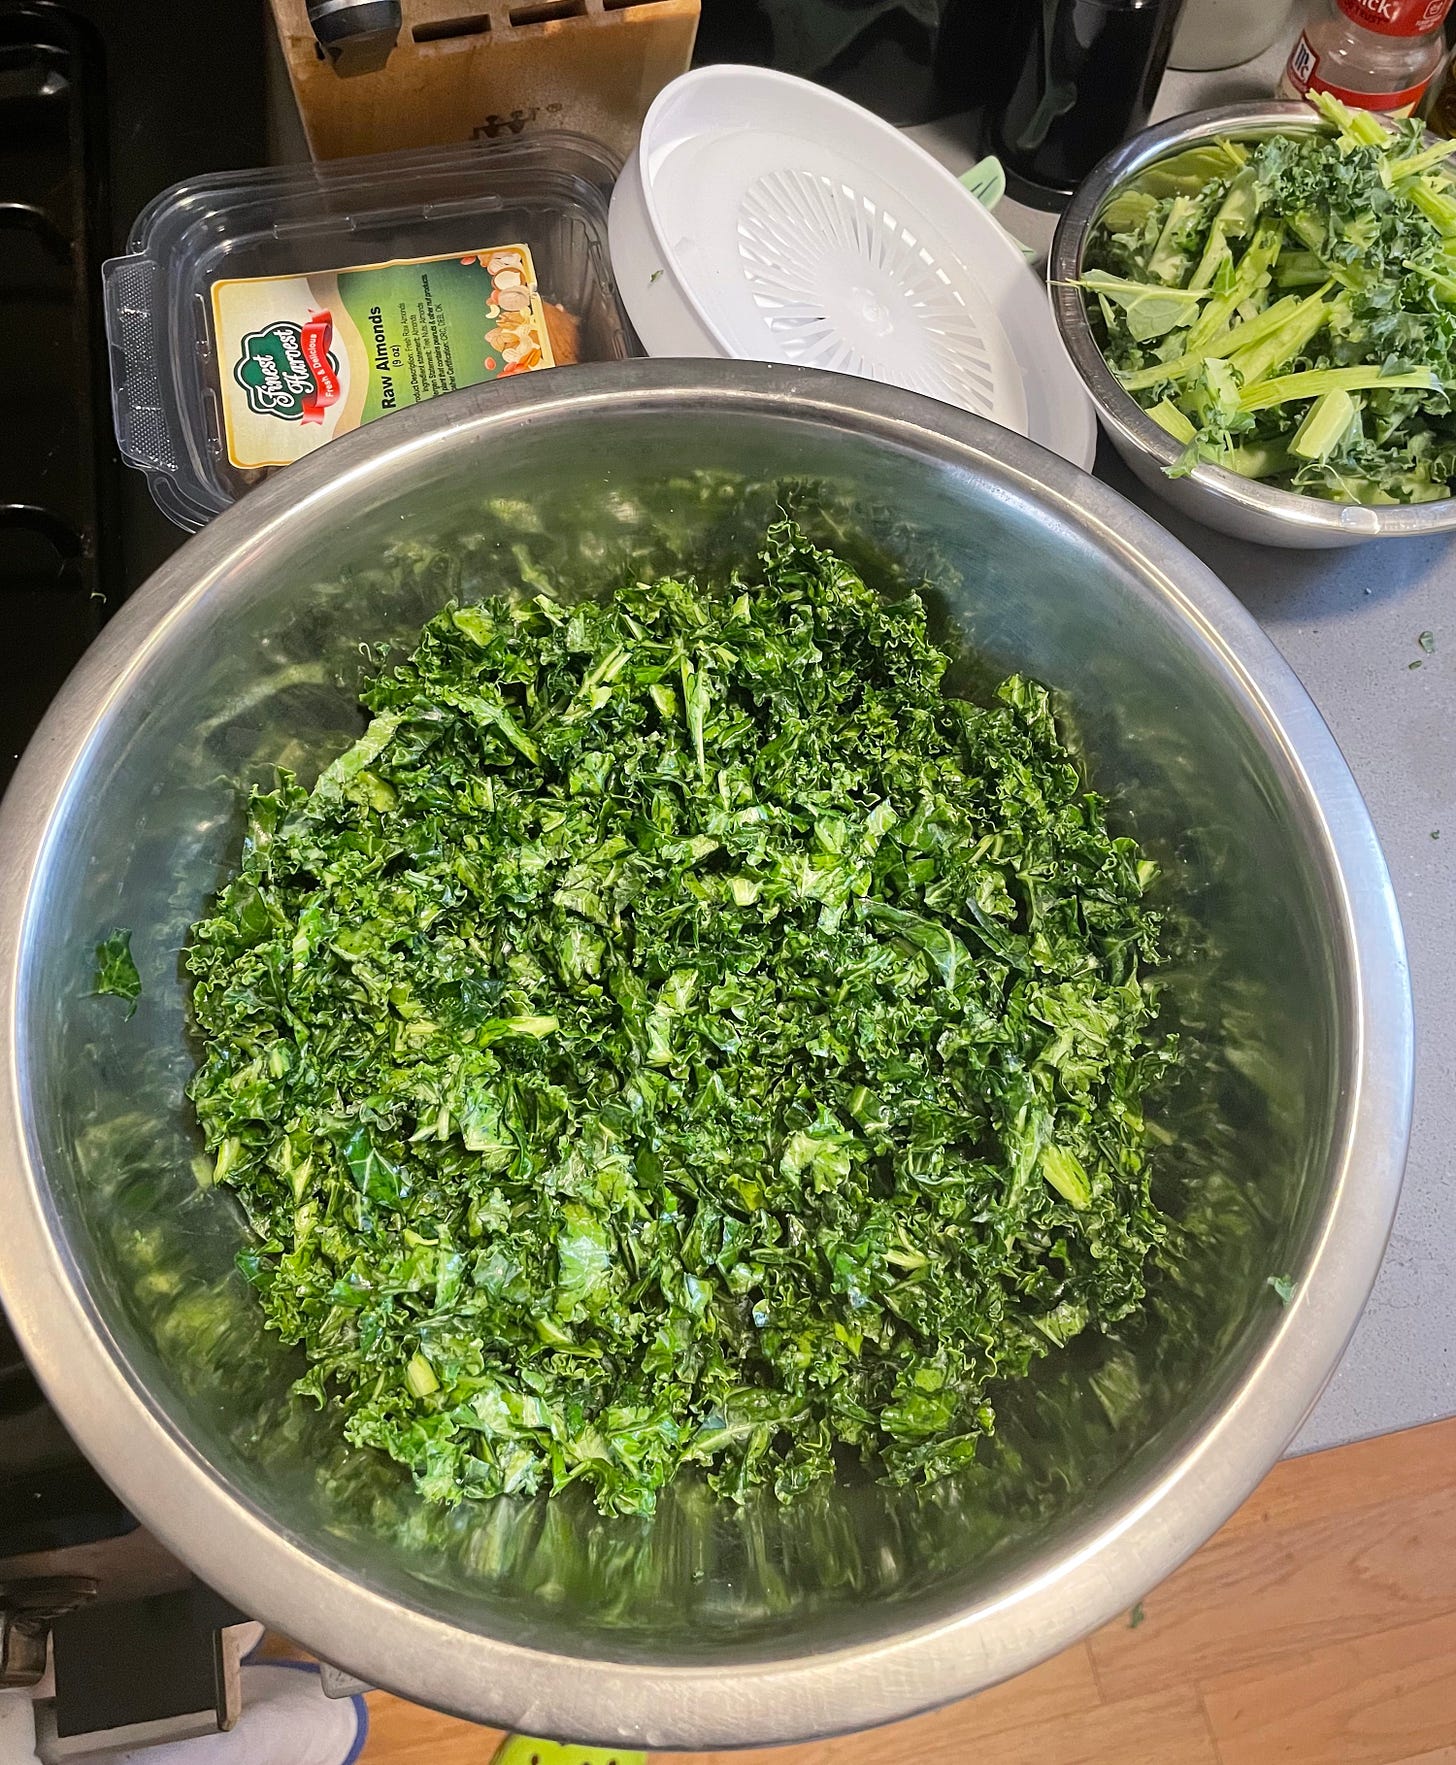 massaged kale in bowl